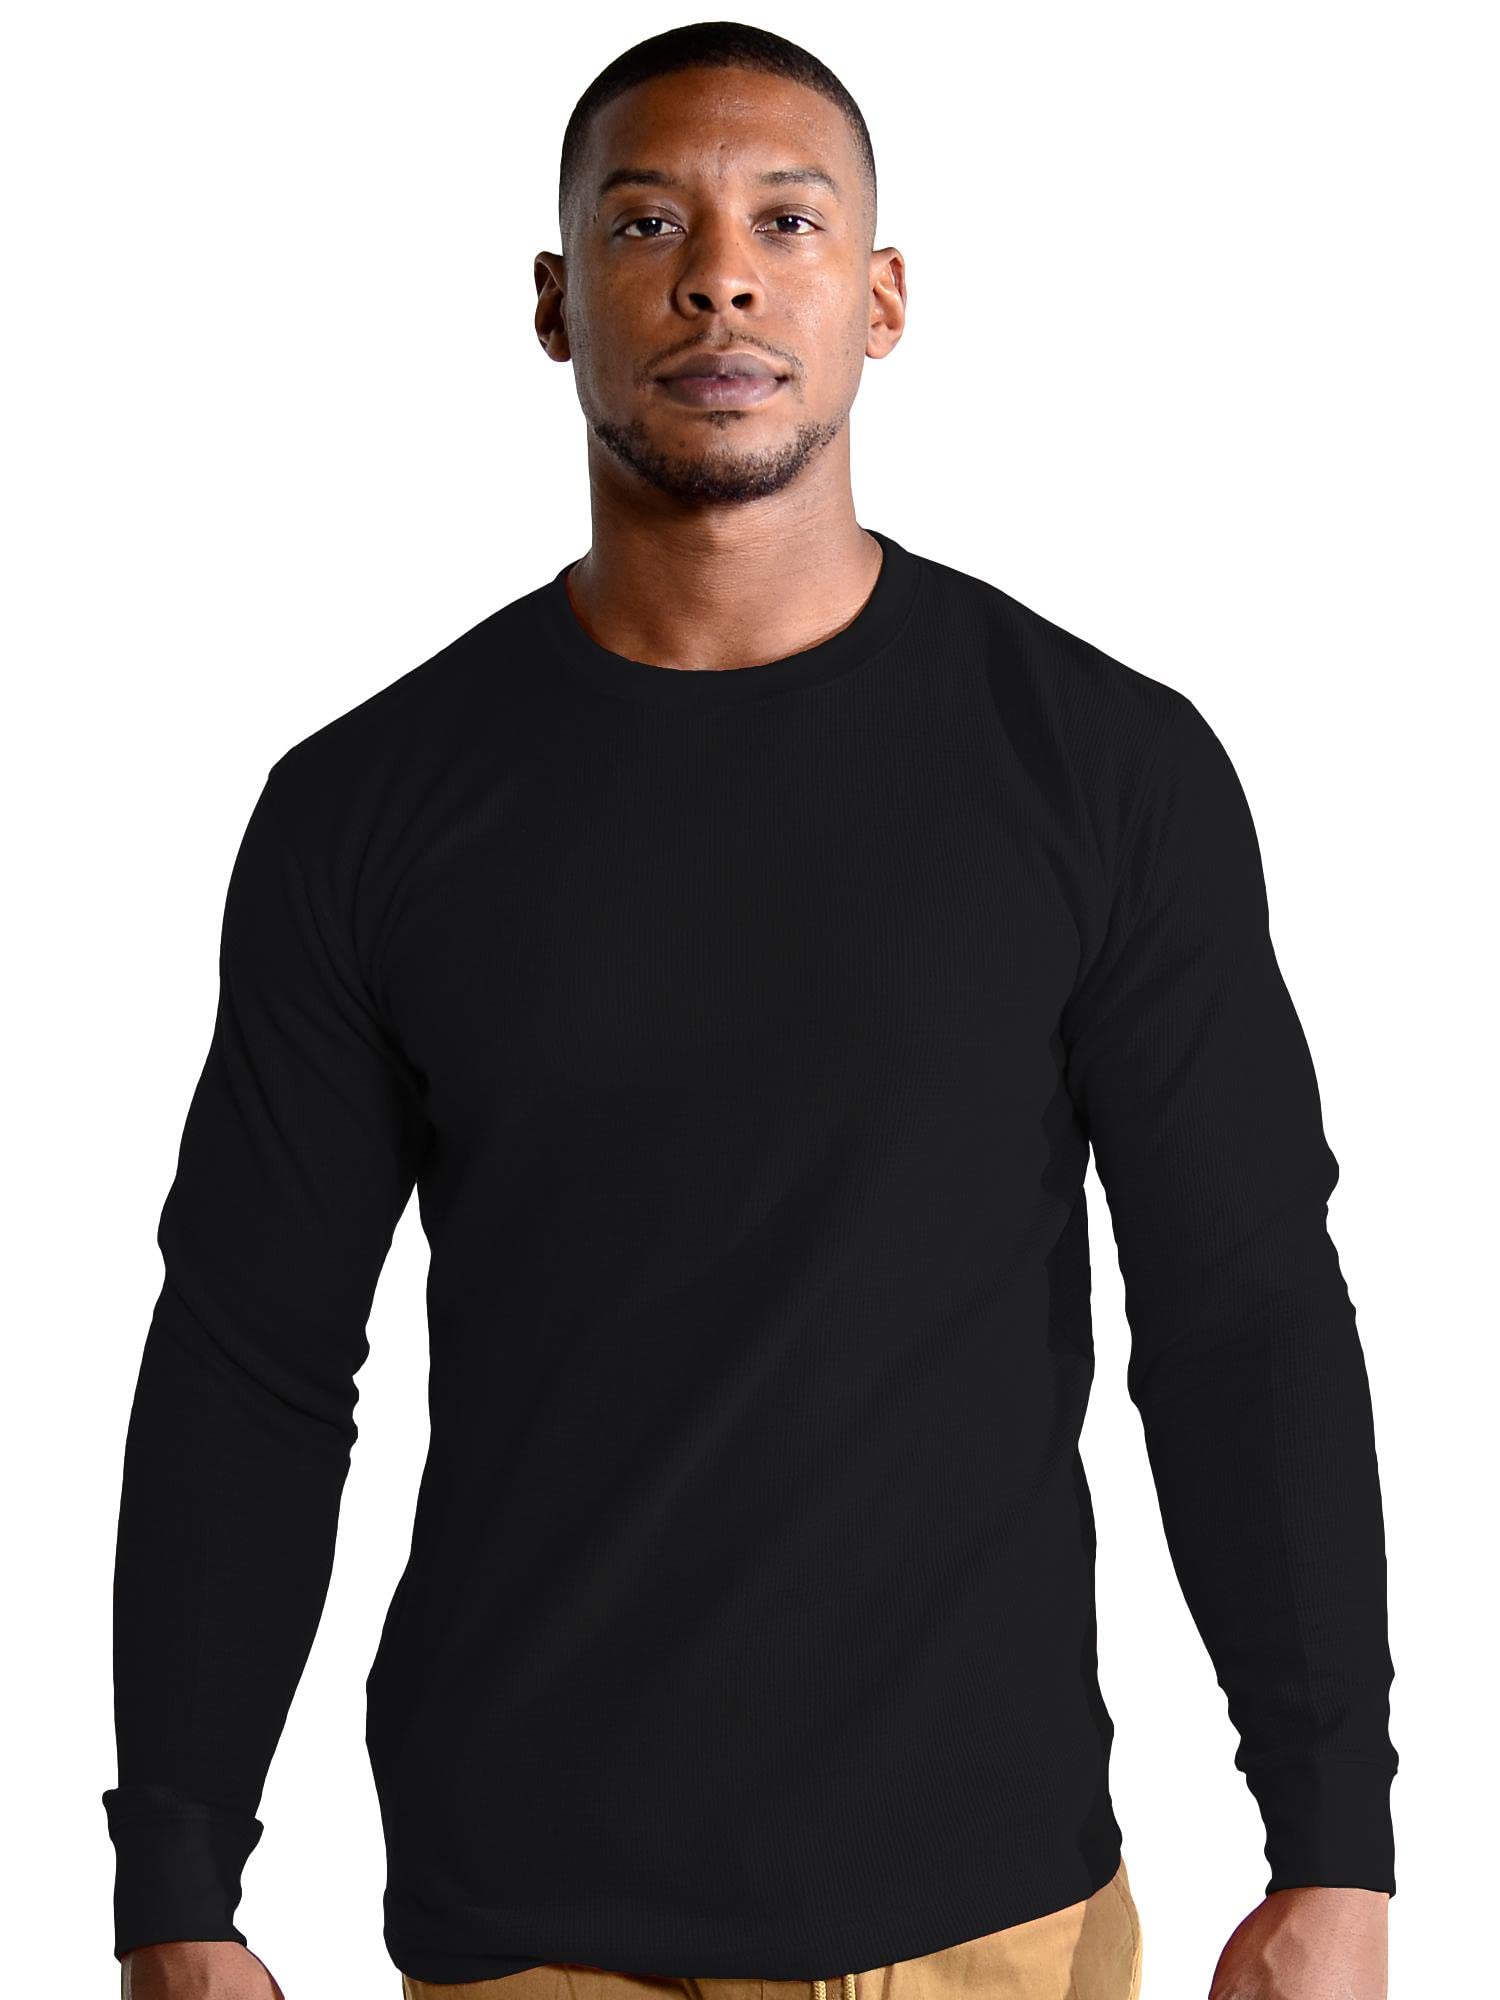 Big Men's Long Sleeve T-shirt black tee shirt men plus size